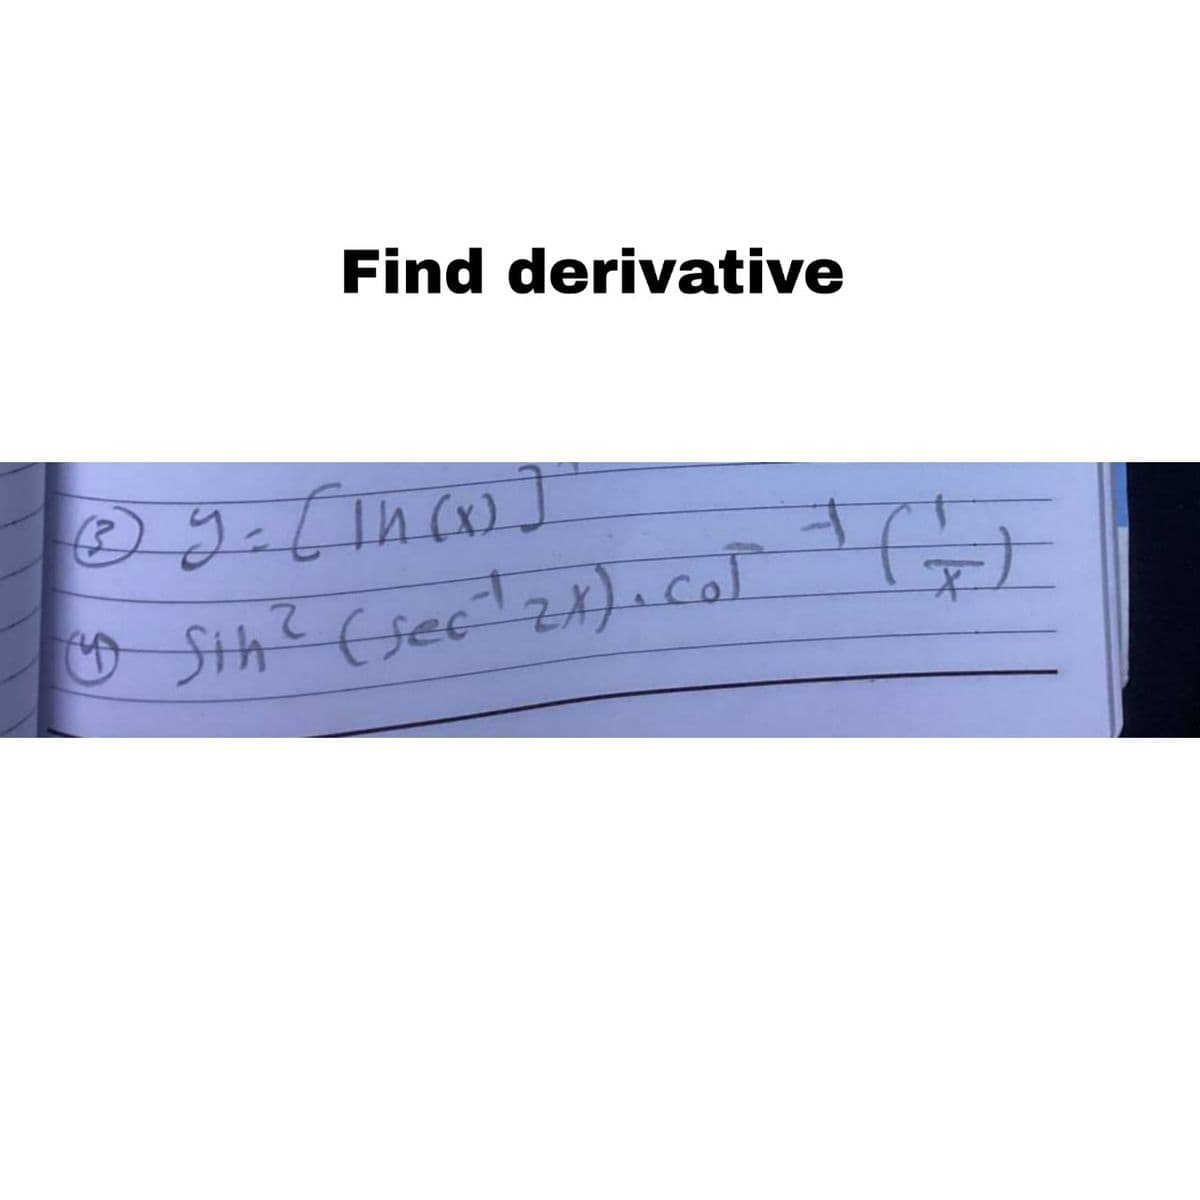 Find derivative
③y = (1h (x)]
न
4 5th² (sec" 2x).col ()